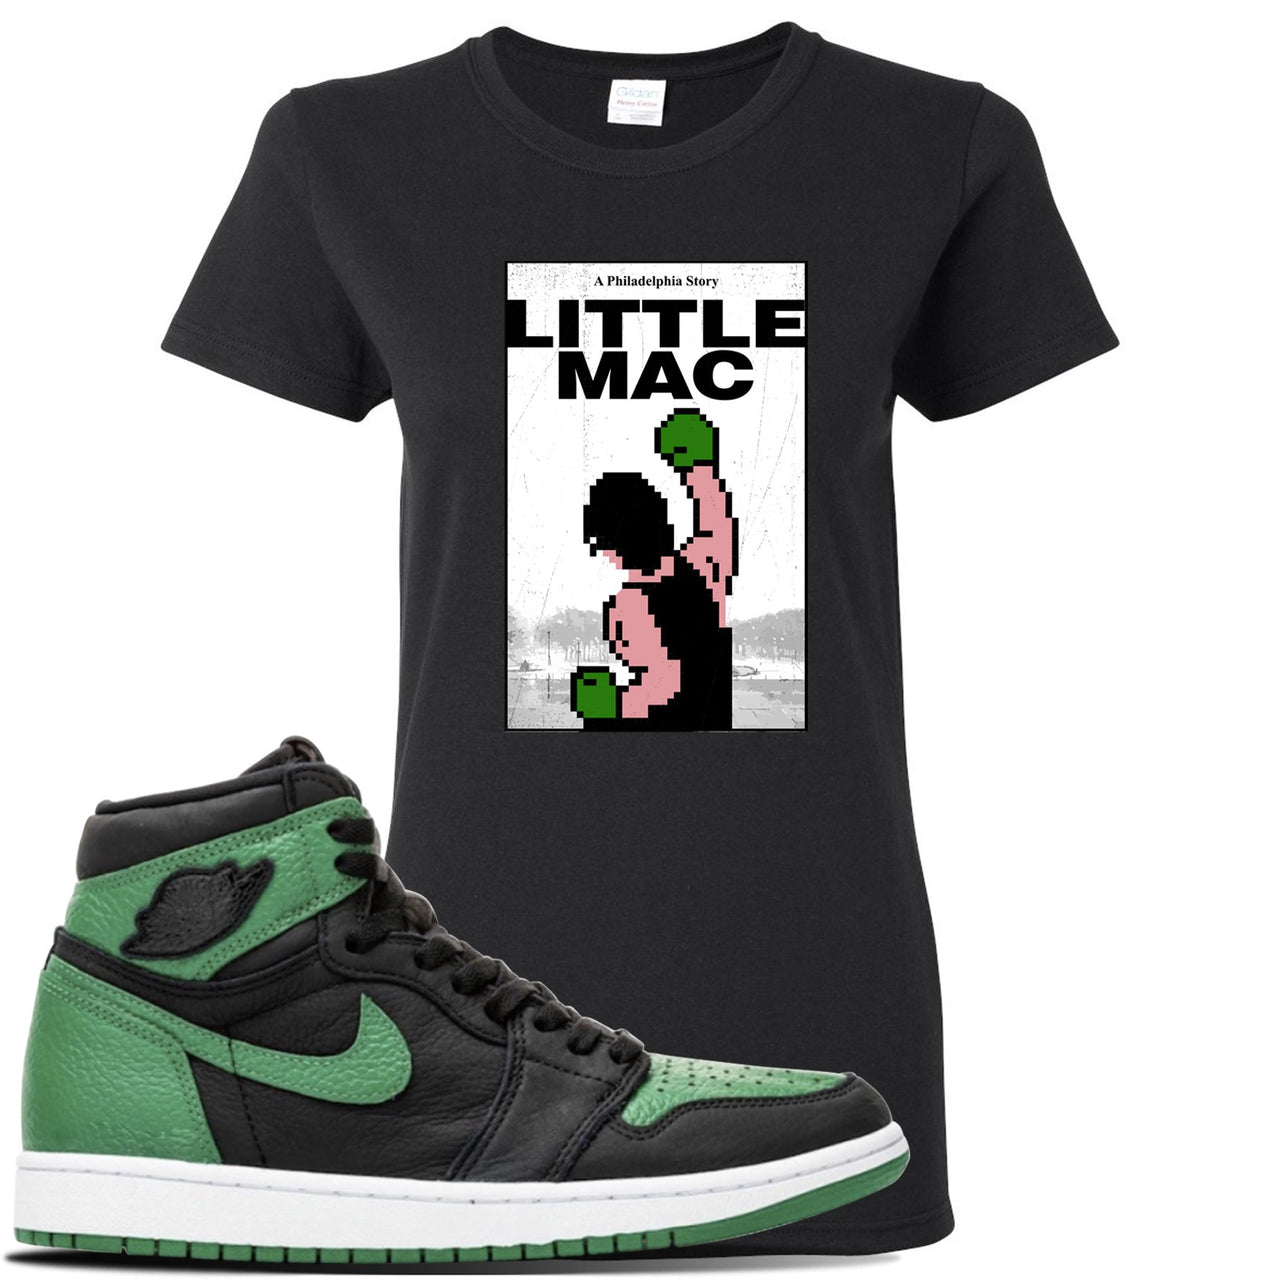 Jordan 1 Retro High OG Pine Green Gym Sneaker Black Women's T Shirt | Women's Tees to match Air Jordan 1 Retro High OG Pine Green Gym Shoes | Little Mac A Philly Story